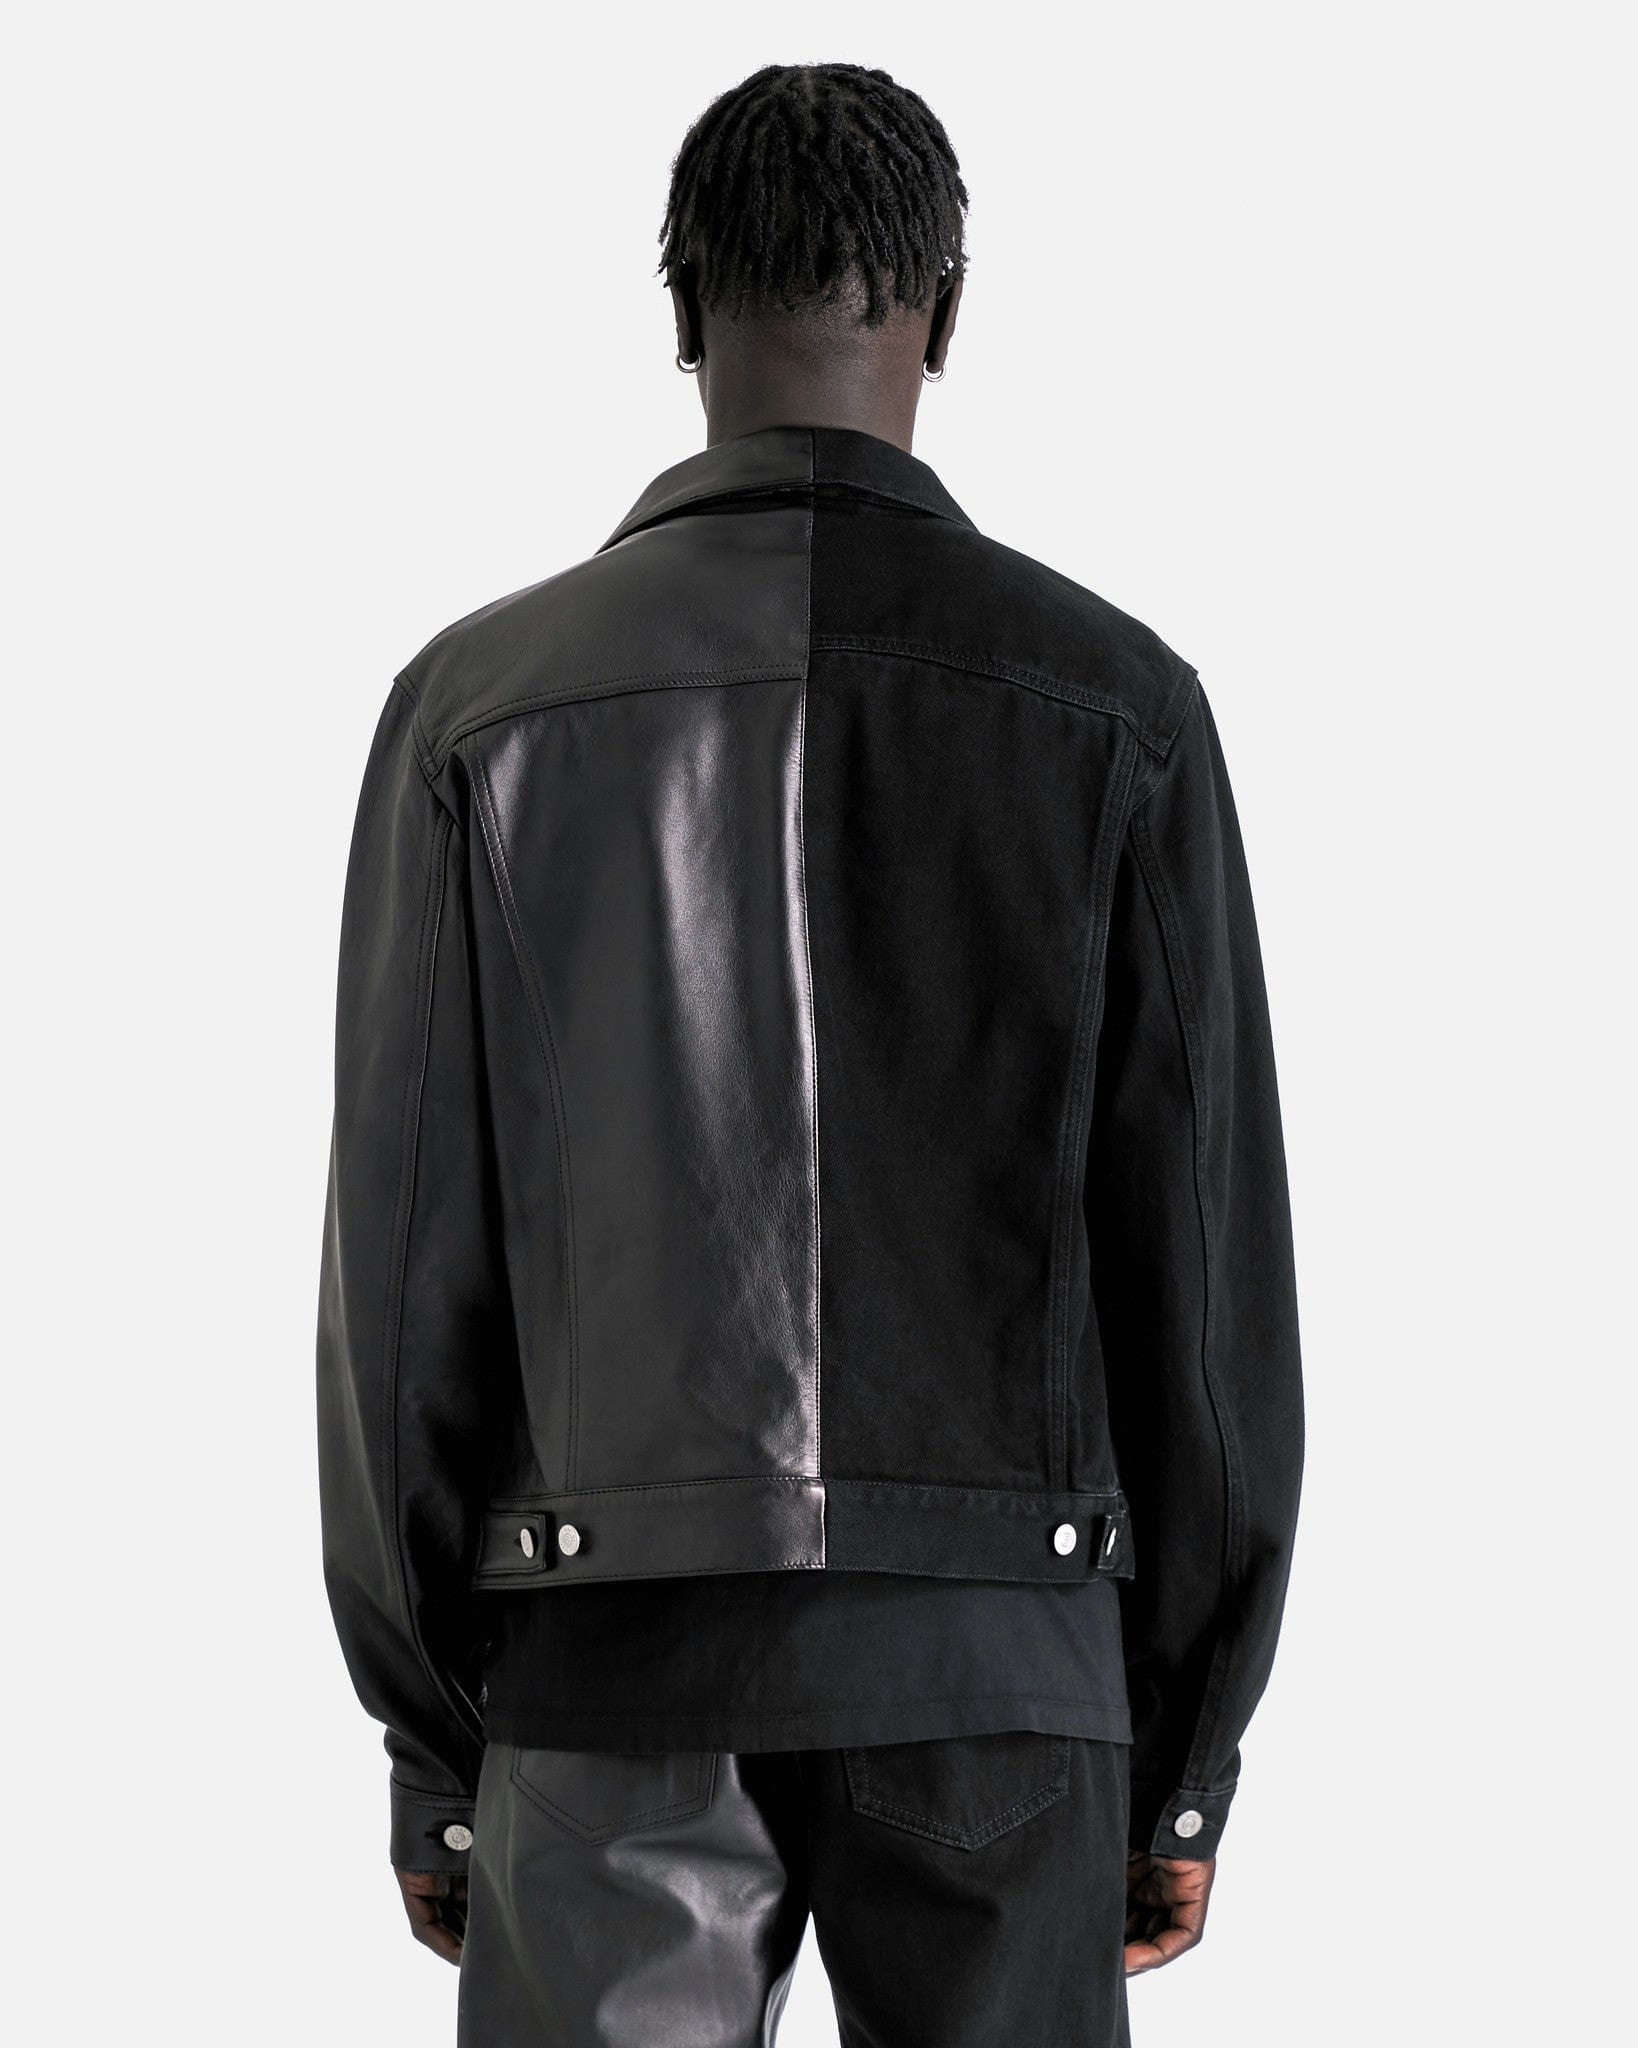 MM6 Maison Margiela Men's Coat 50/50 Sport Jacket in Black